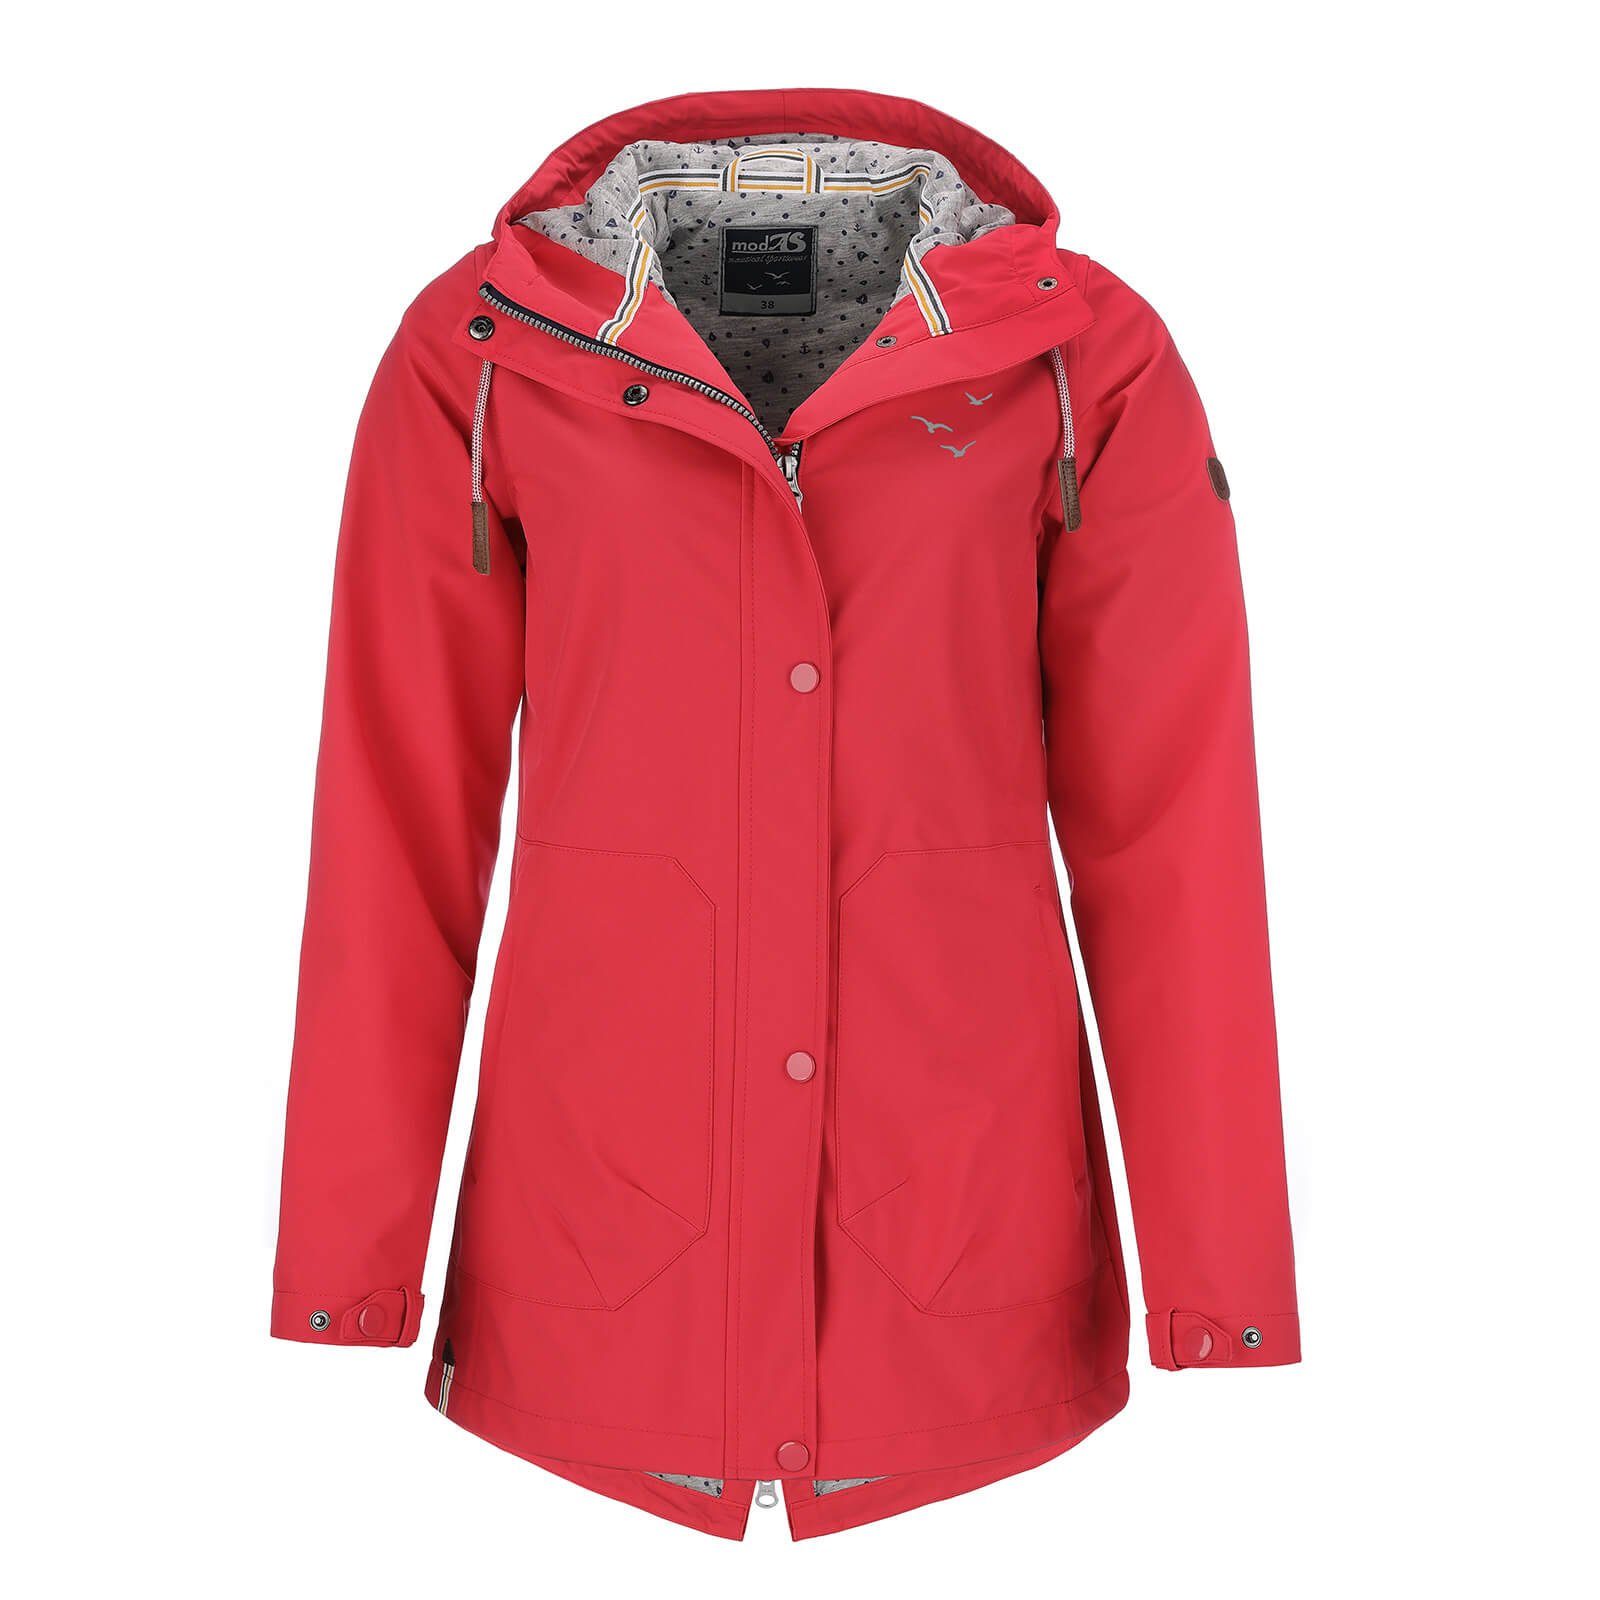 modAS Softshelljacke Damen Softshell-Mantel Unifarben - Outdoor Jacke Regenjacke mit Kapuze rot